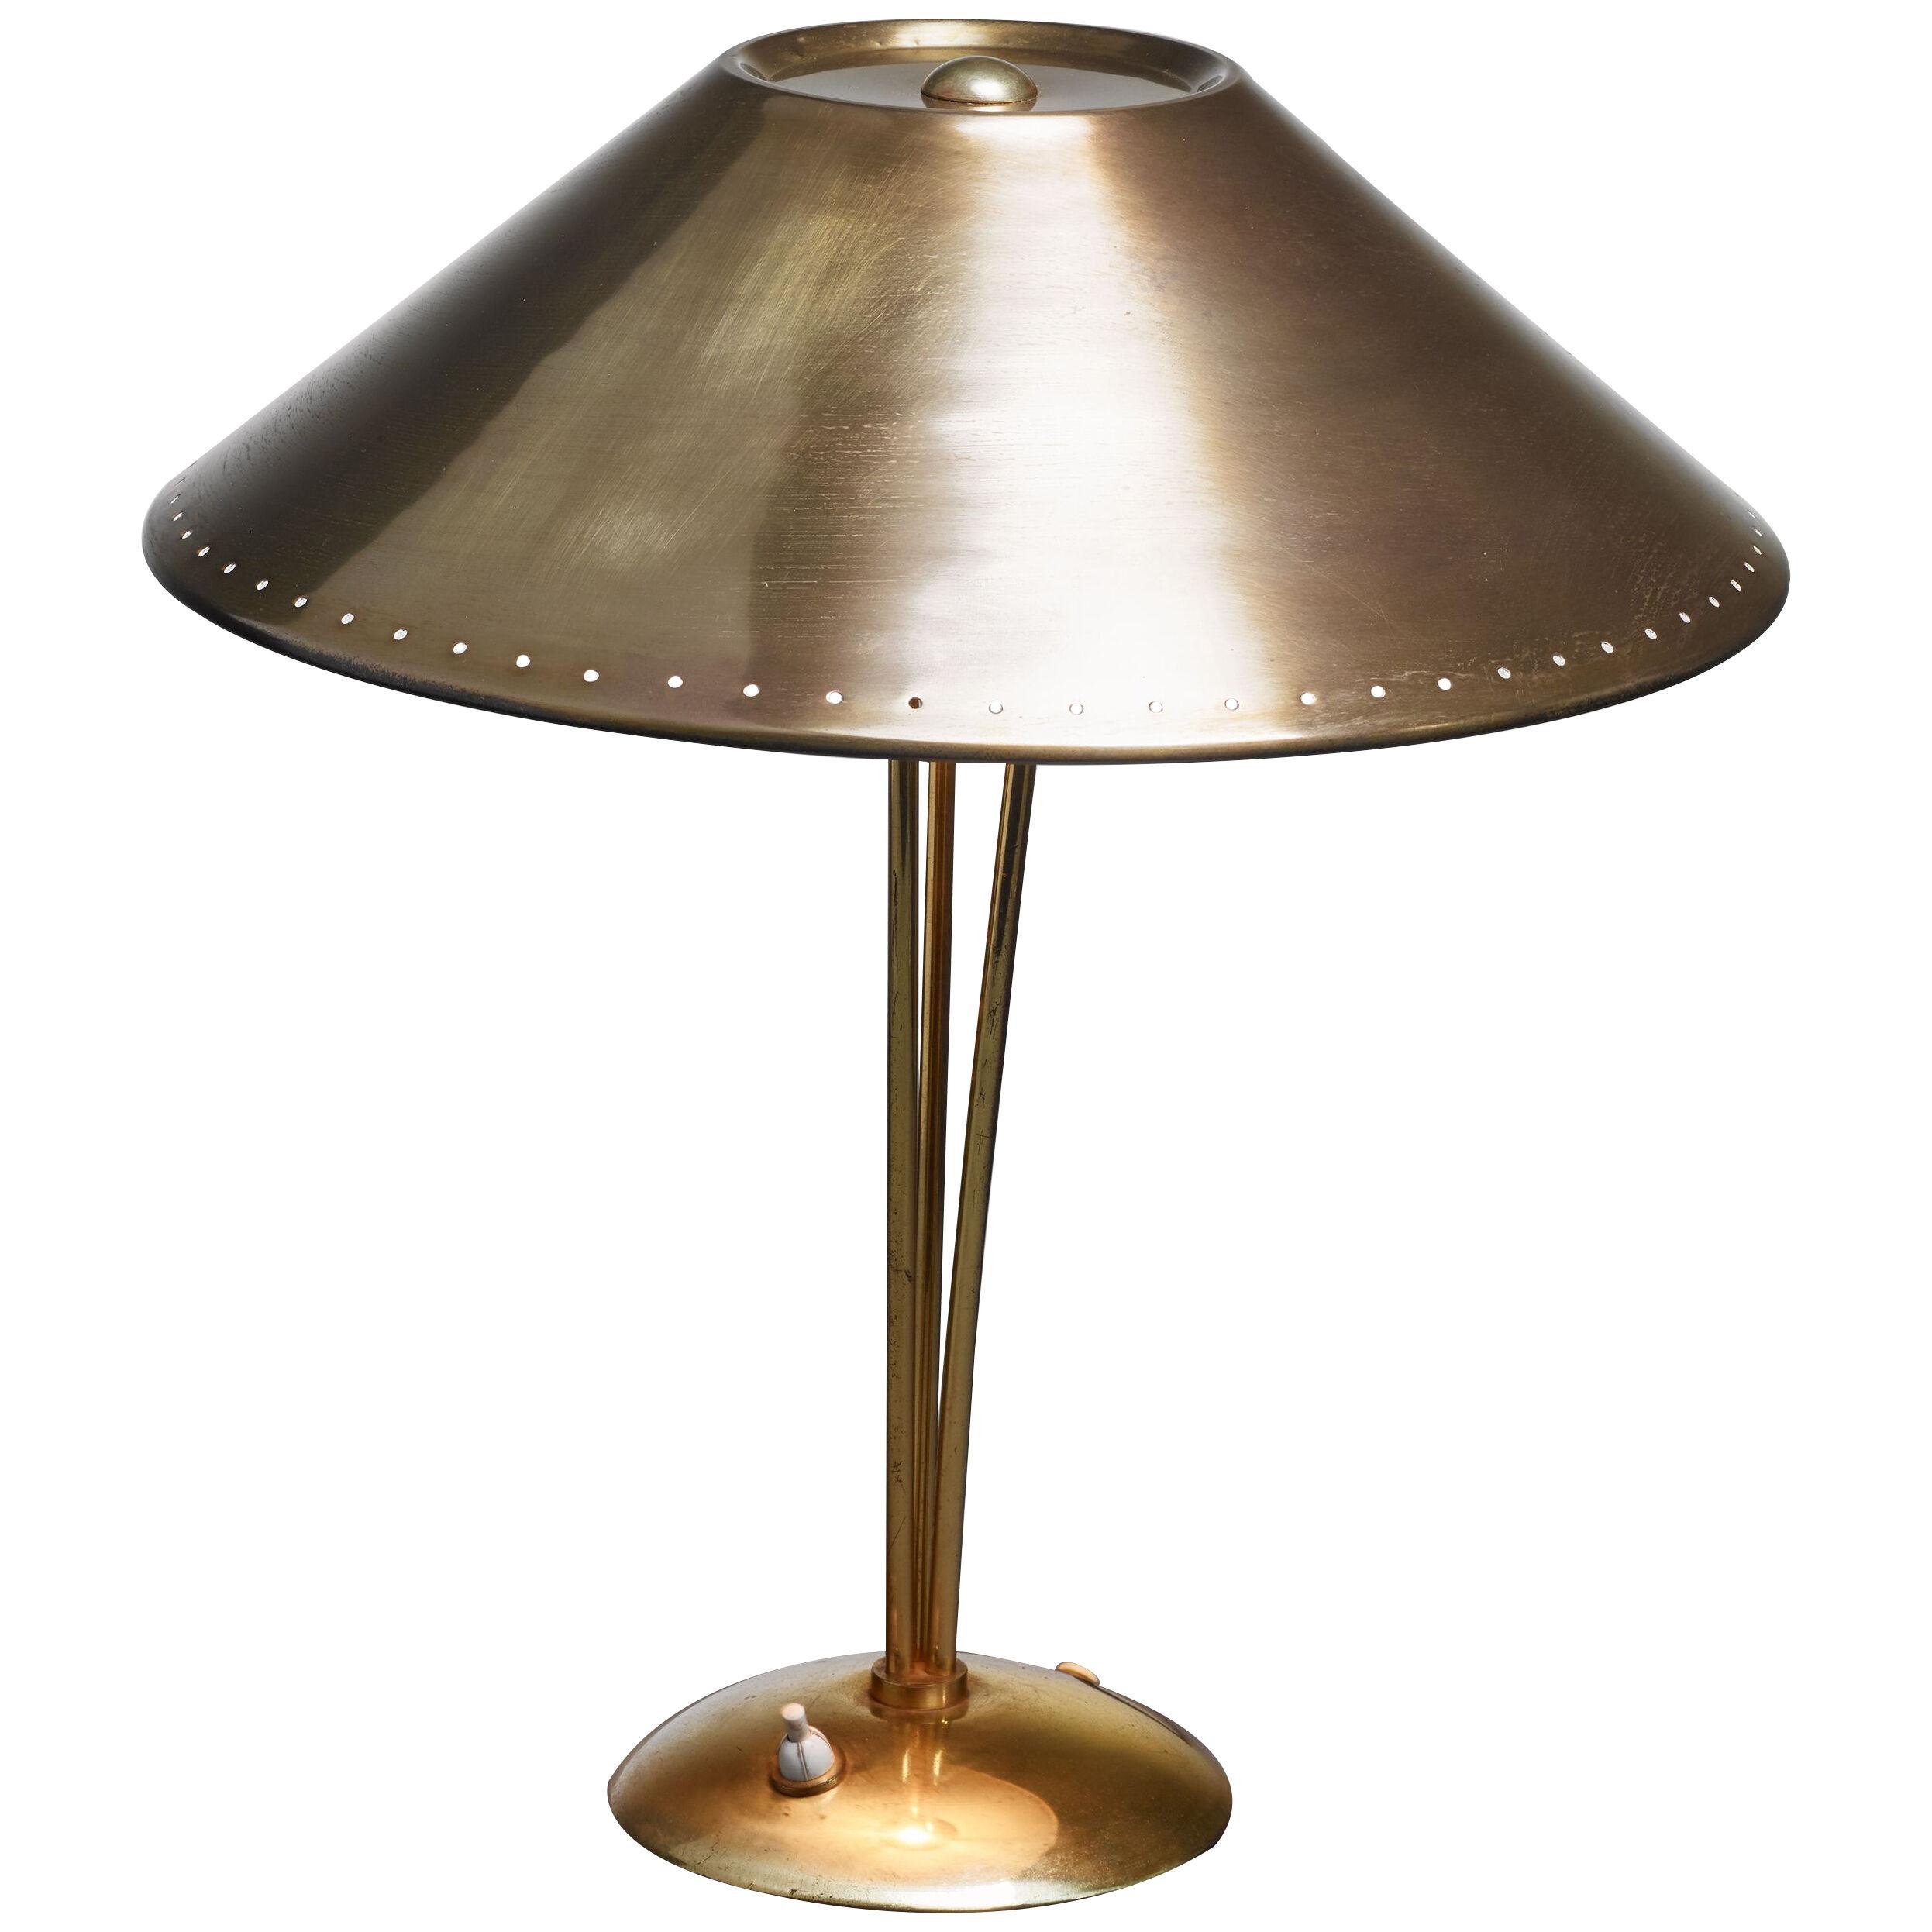 Solid Brass Table Lamp on a Tripod Stem, Austria, 1950s